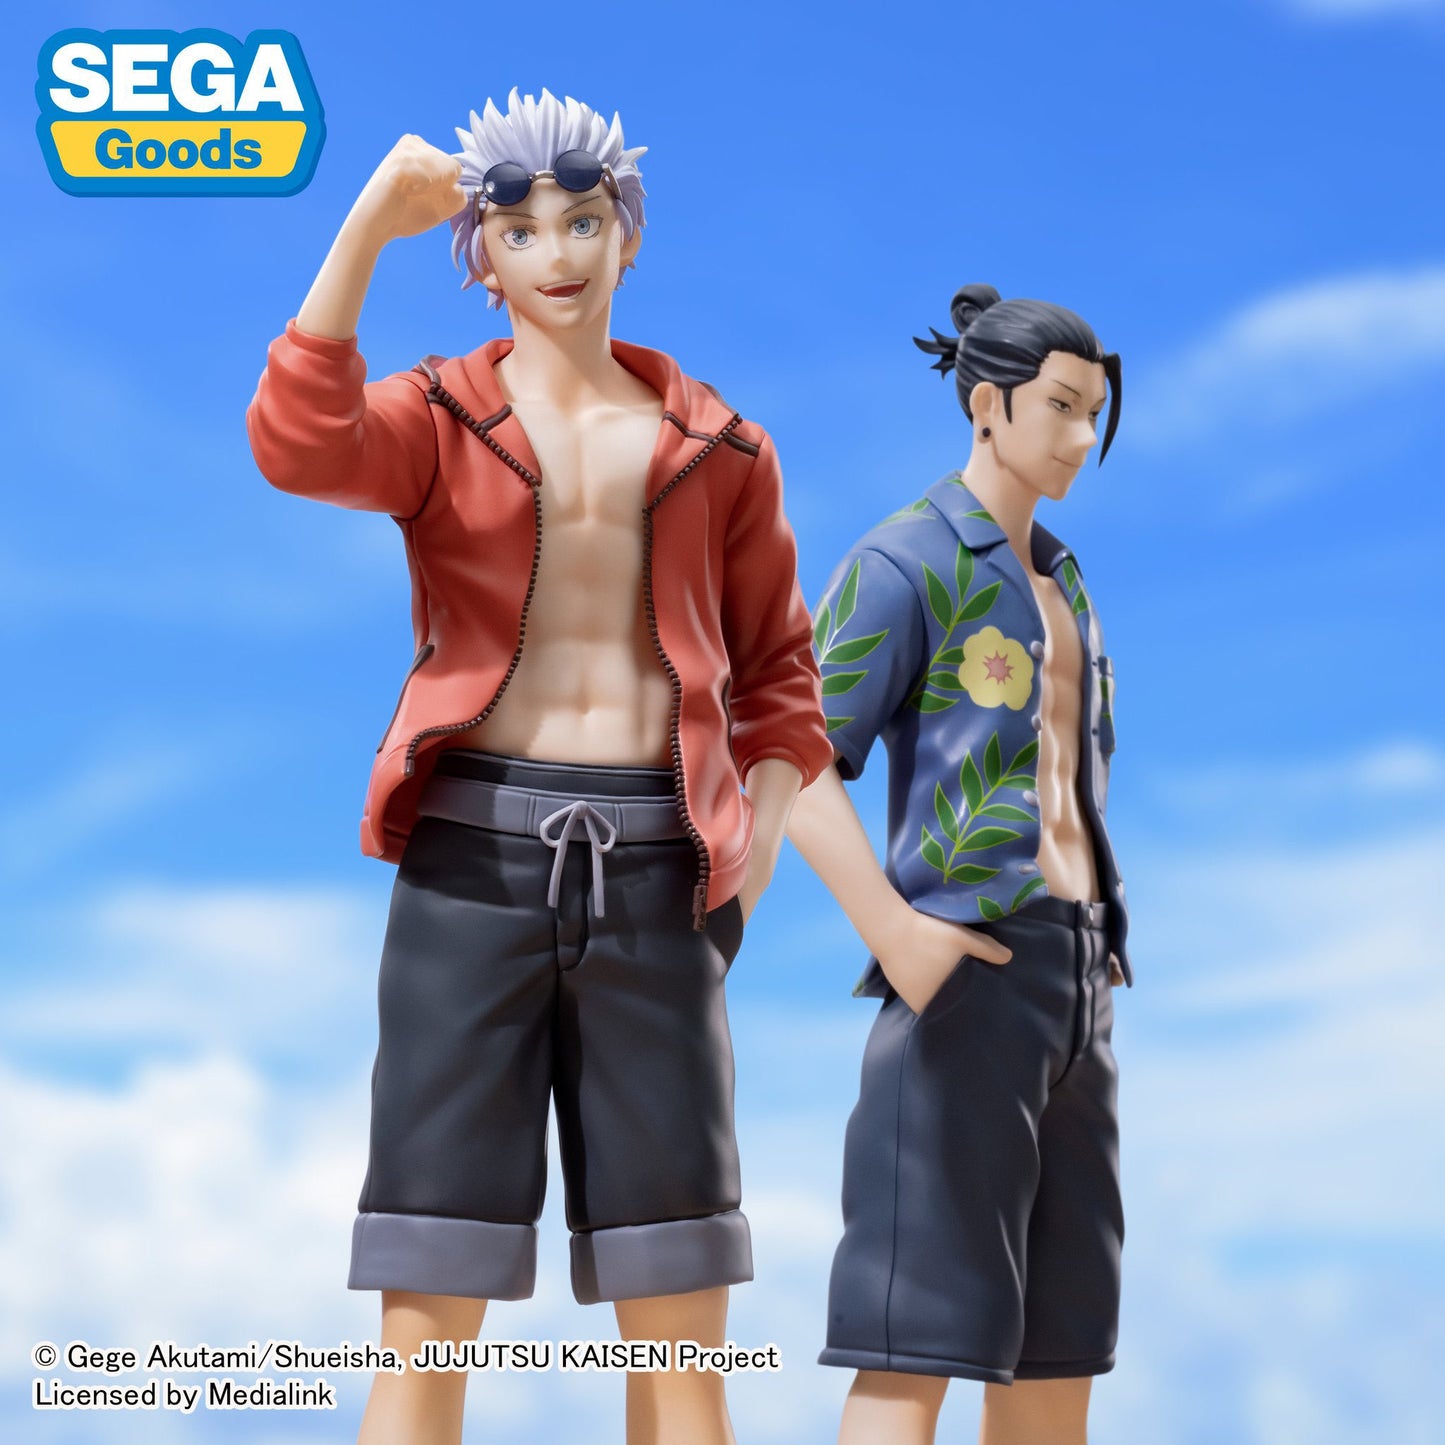 Jujutsu Kaisen Gojo and Geto Beach Set of two figures by Sega (RARE)